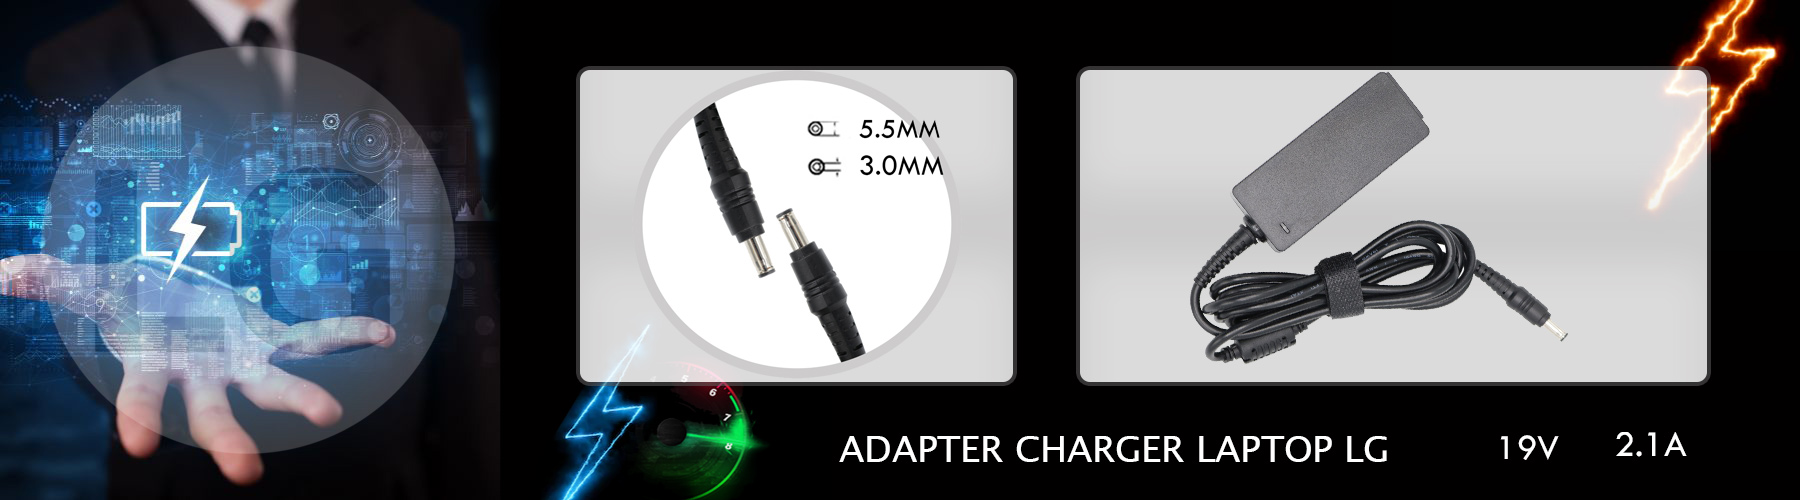 شارژر اداپتور لپ تاپ ال جی 19ولت 2.1 آمپر